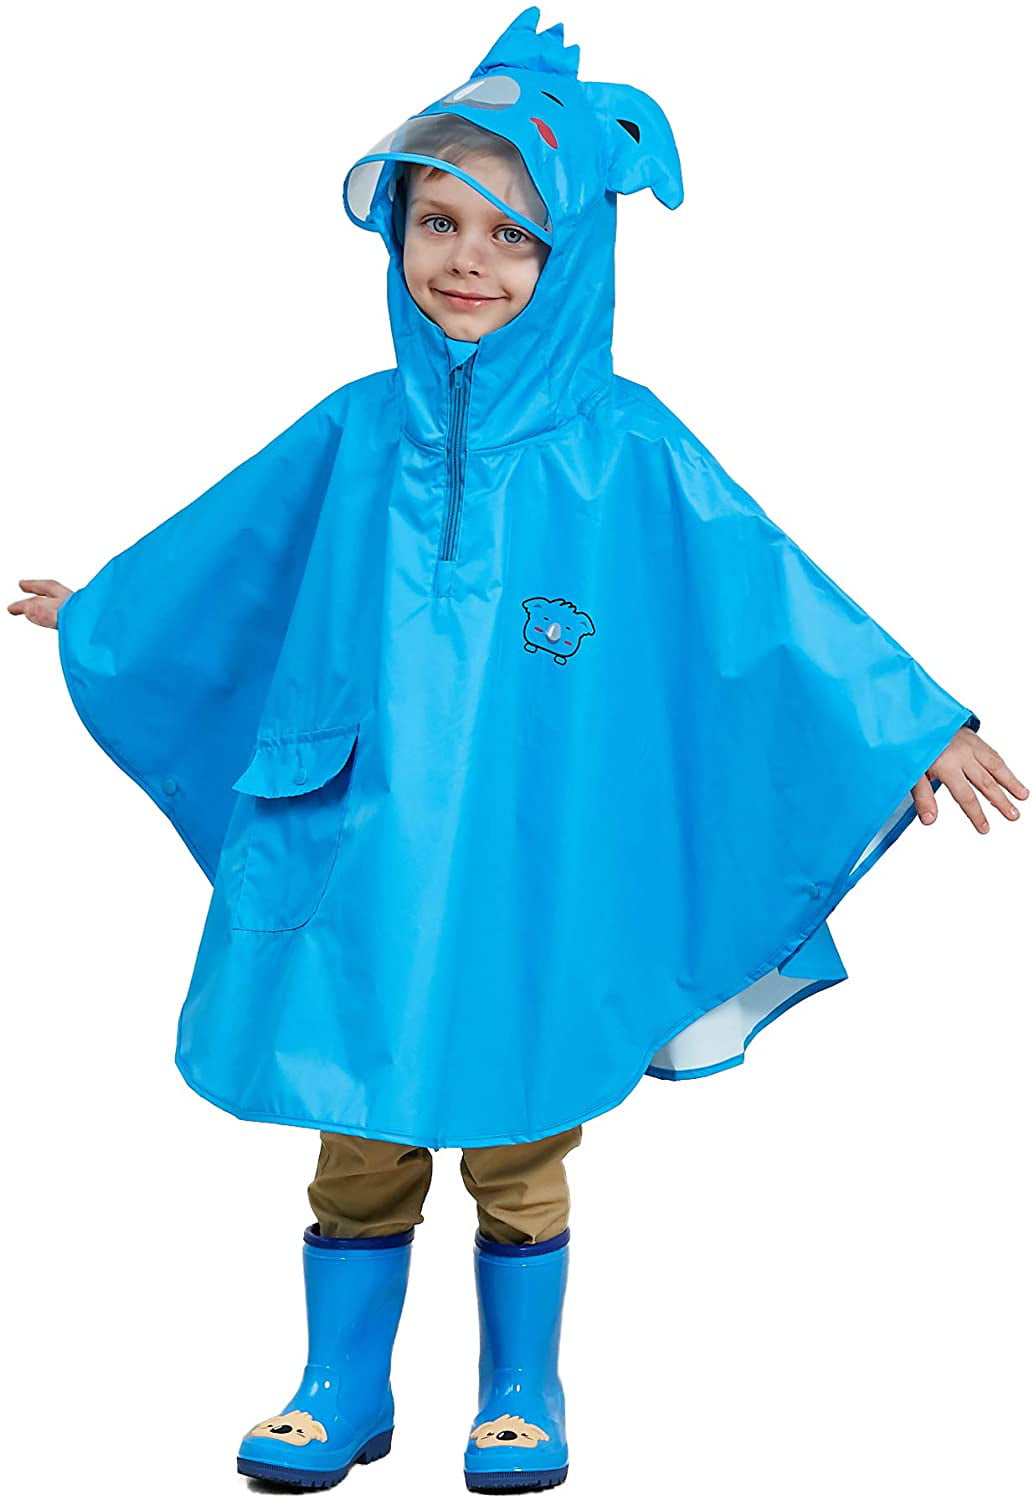 Age 4-6 Child Kids Disposable Waterproof Rain Coat Cape Poncho Jacket Clear 